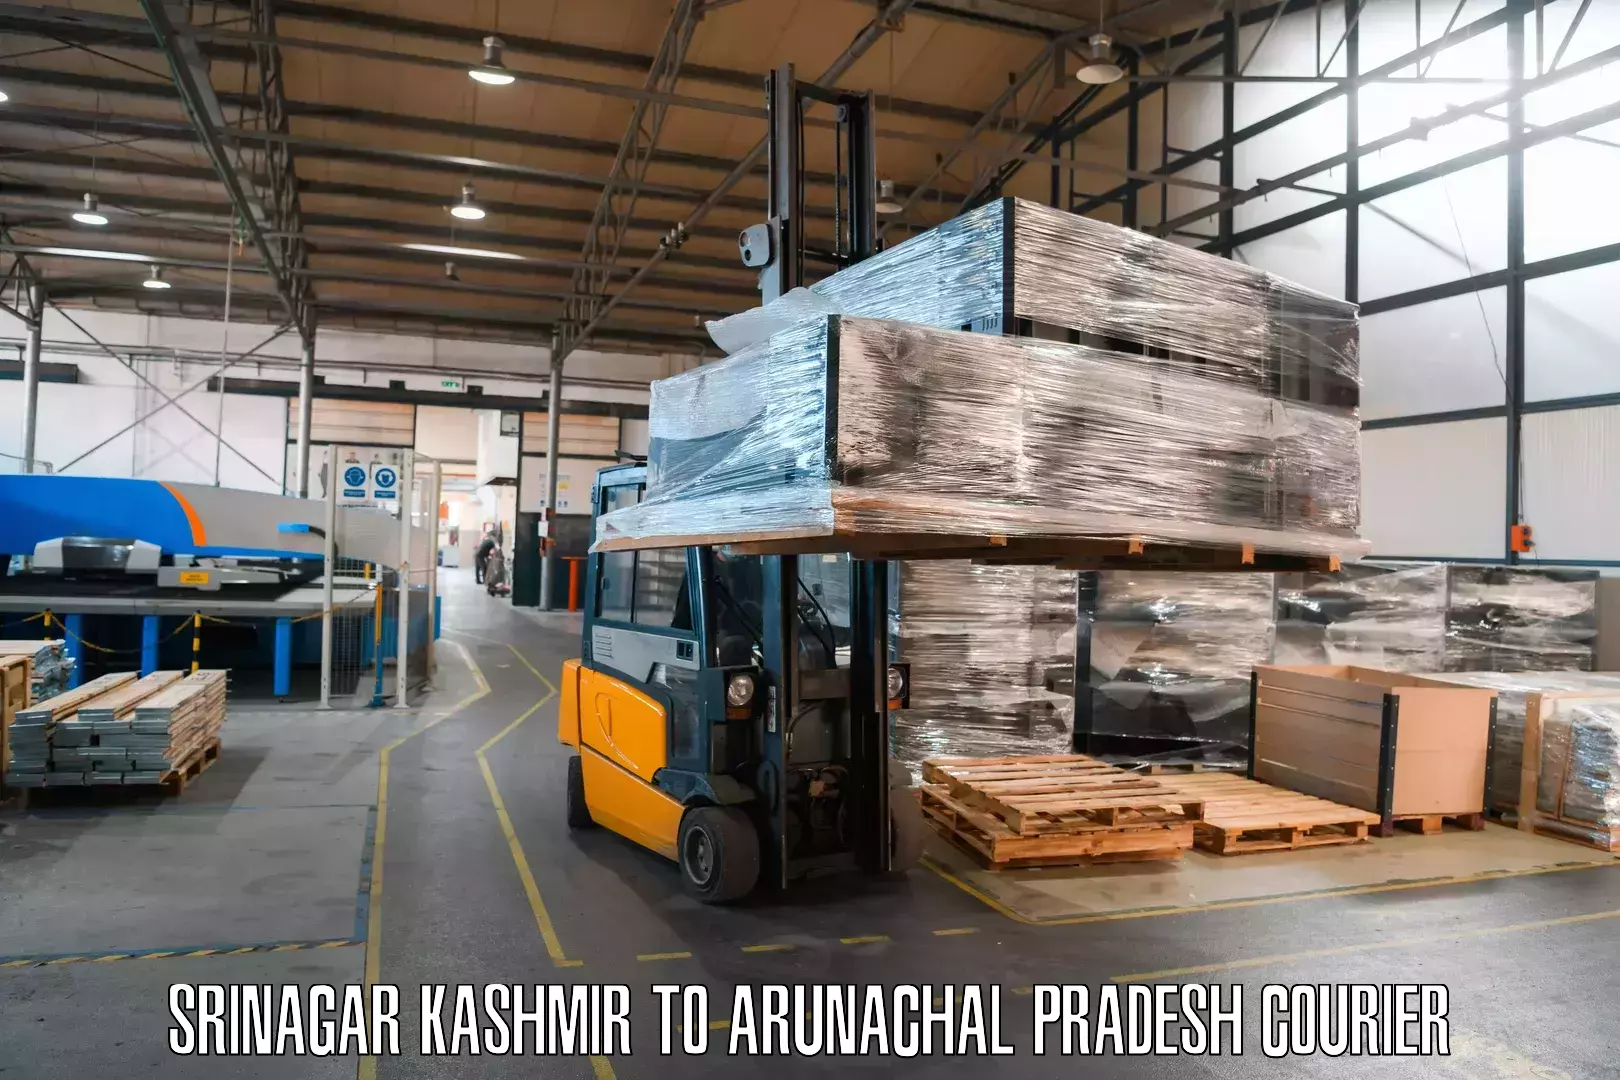 Cargo delivery service Srinagar Kashmir to Yingkiong